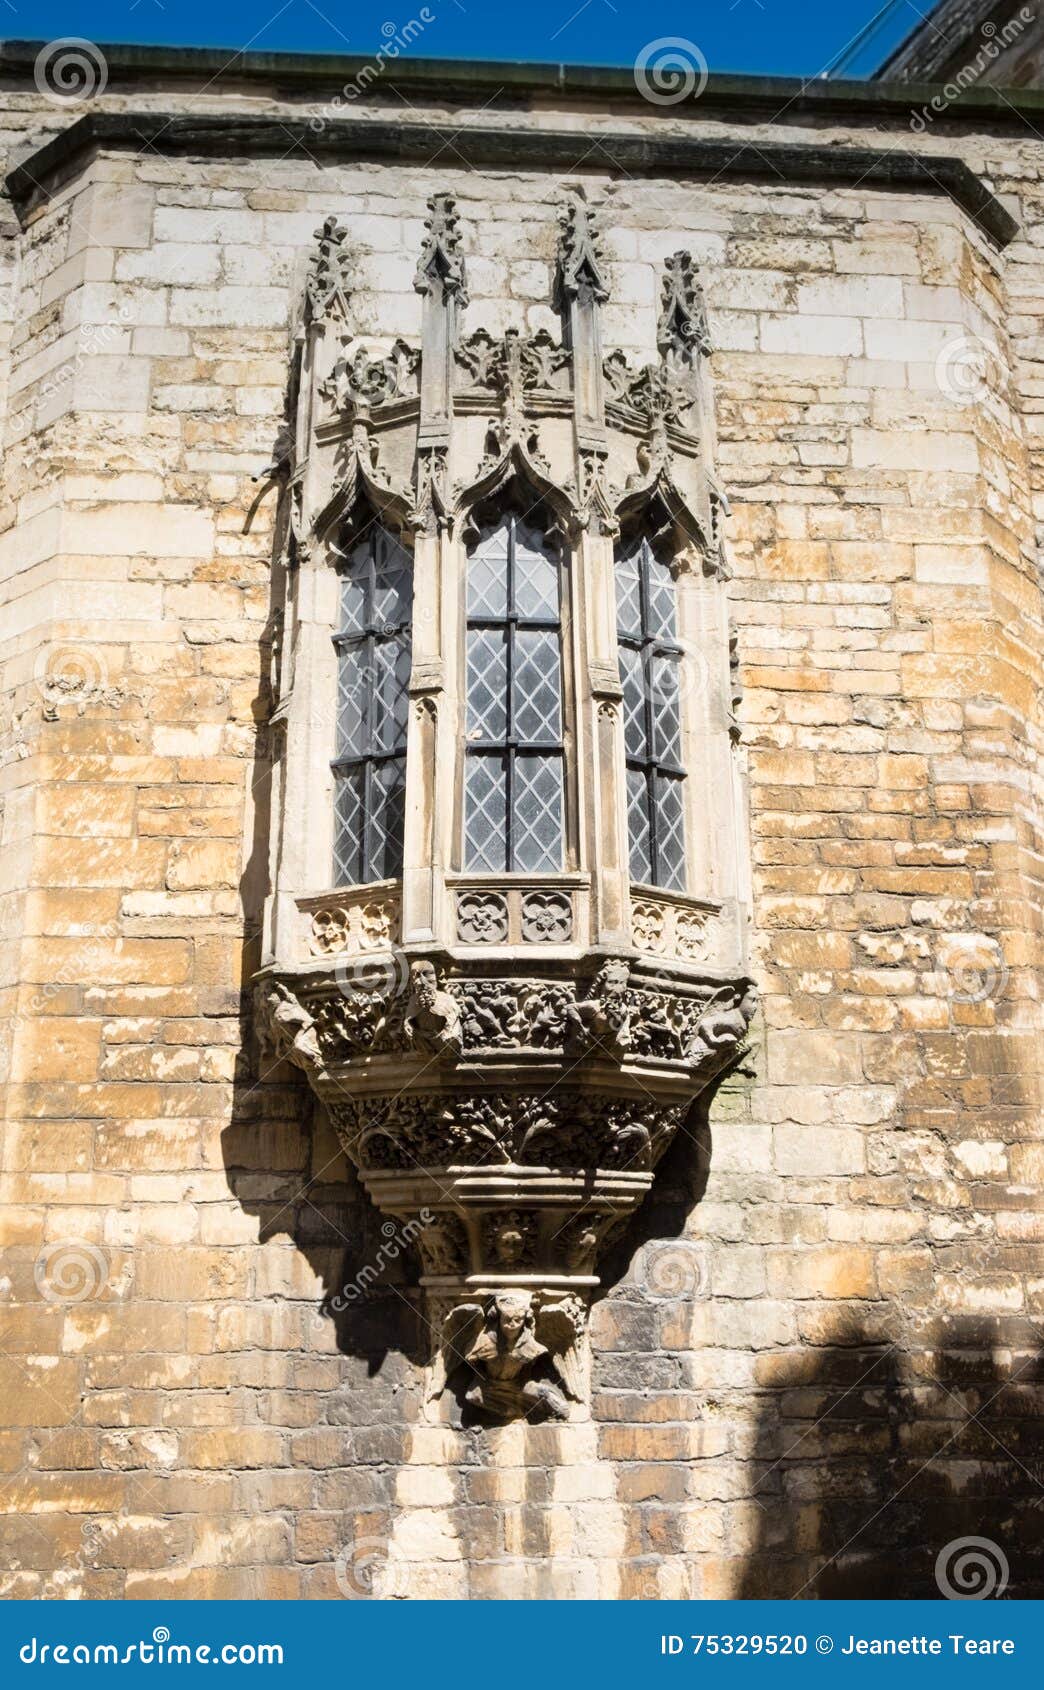 oriel window at lincoln castle gatehouse